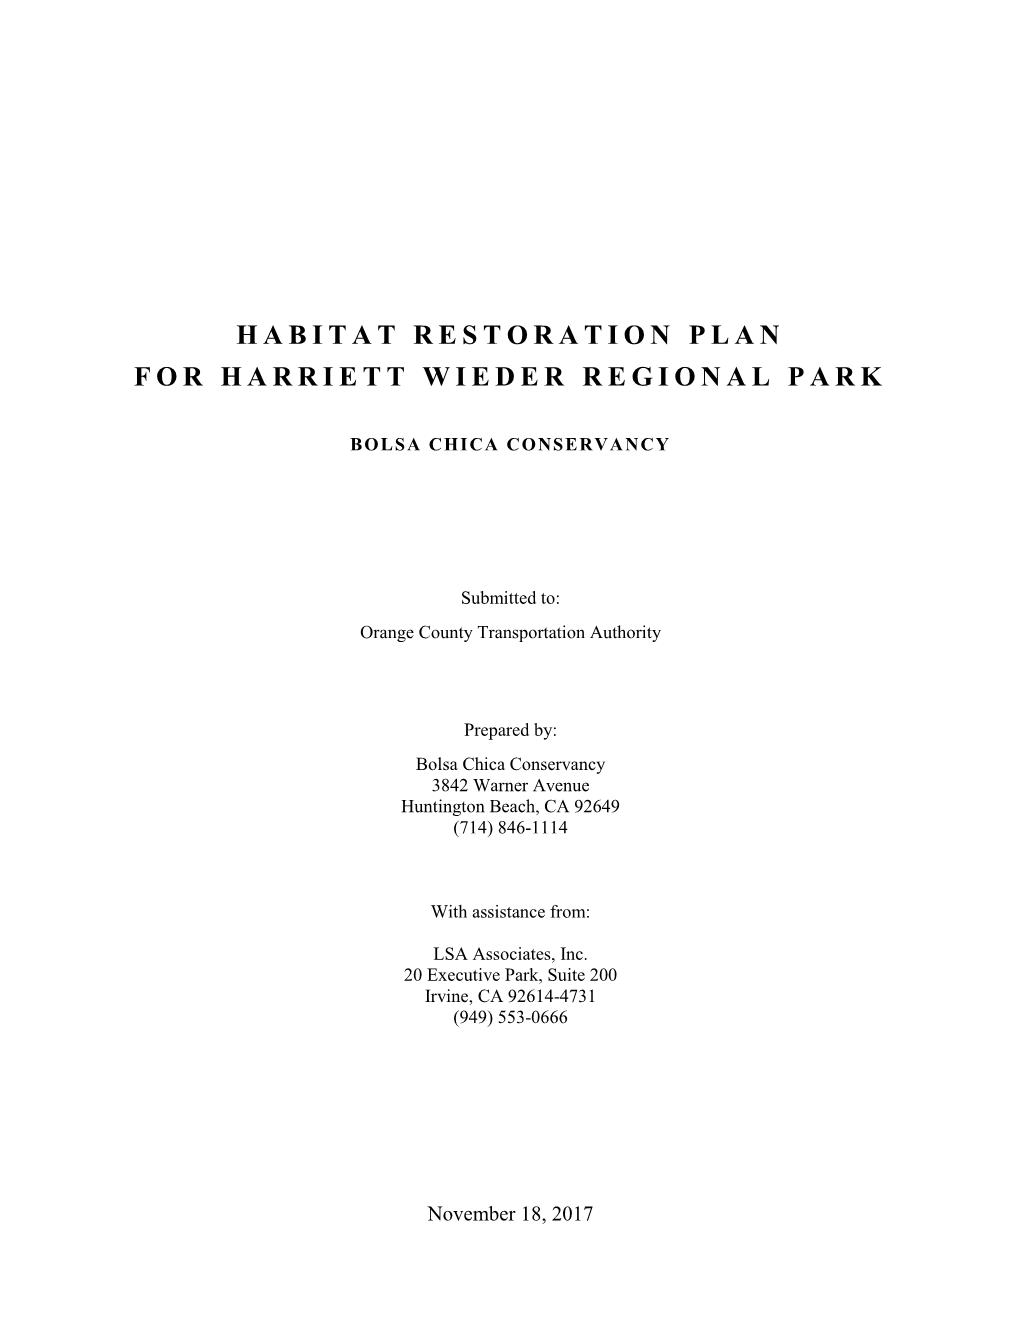 Habitat Restoration Plan for Harriett Wieder Regional Park